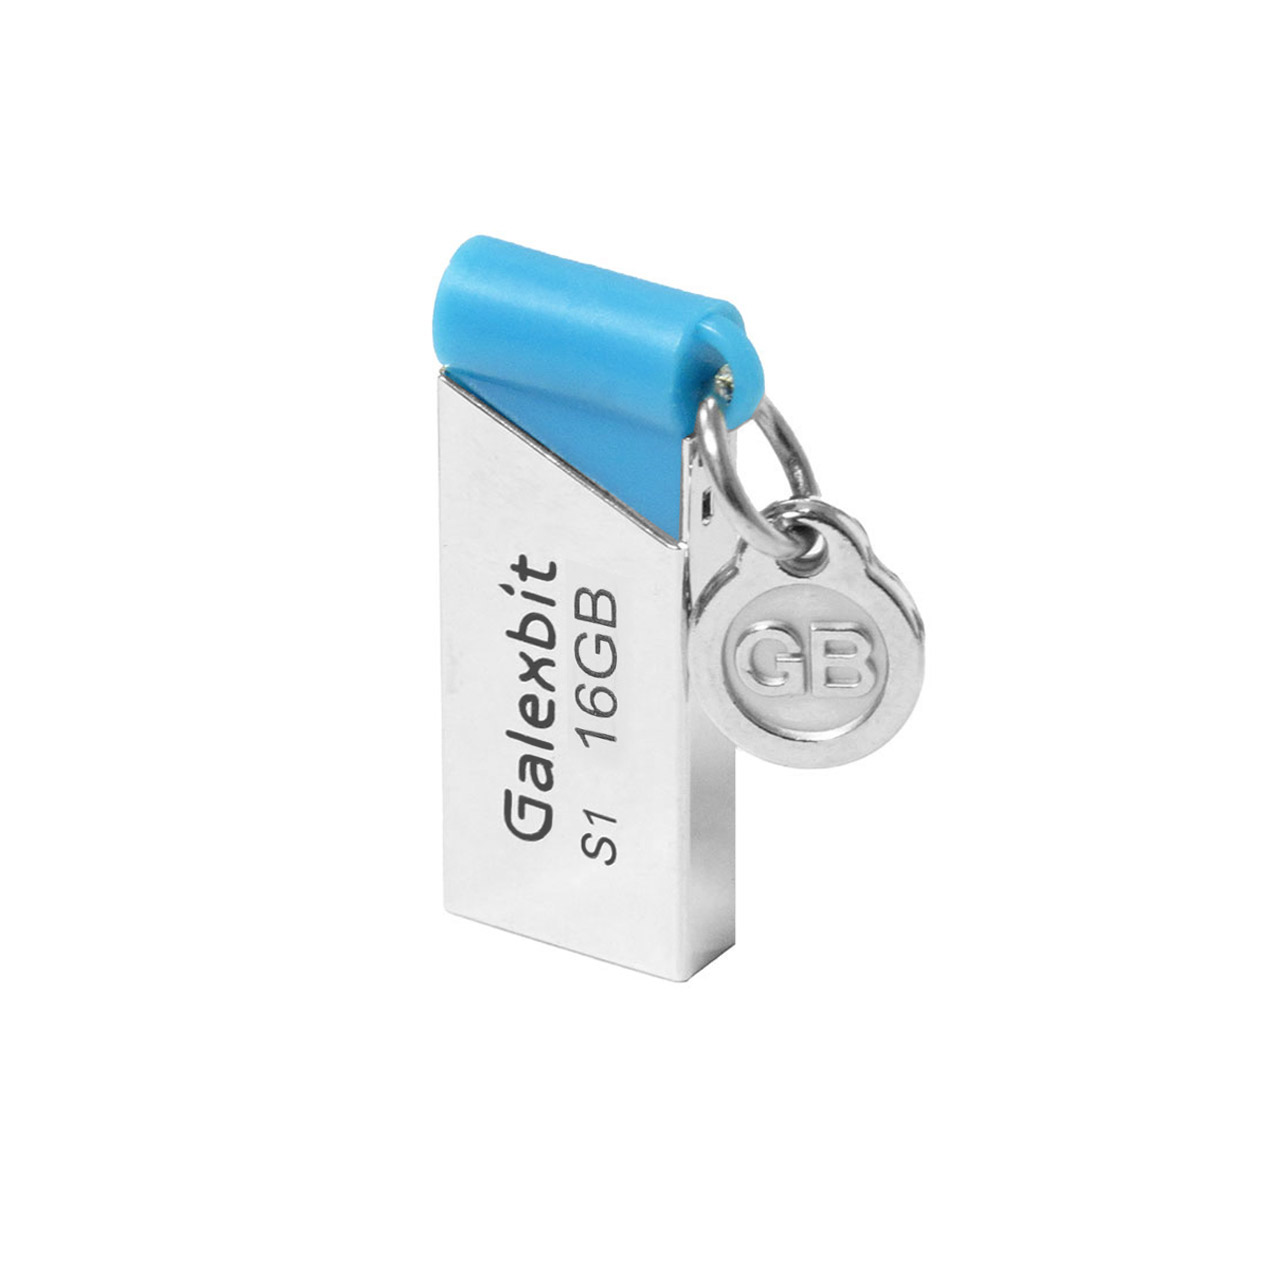 Galexbit S1 USB2.0 Flash Memory - 16GB (گارانتی مادام تلاش) نقره ای #